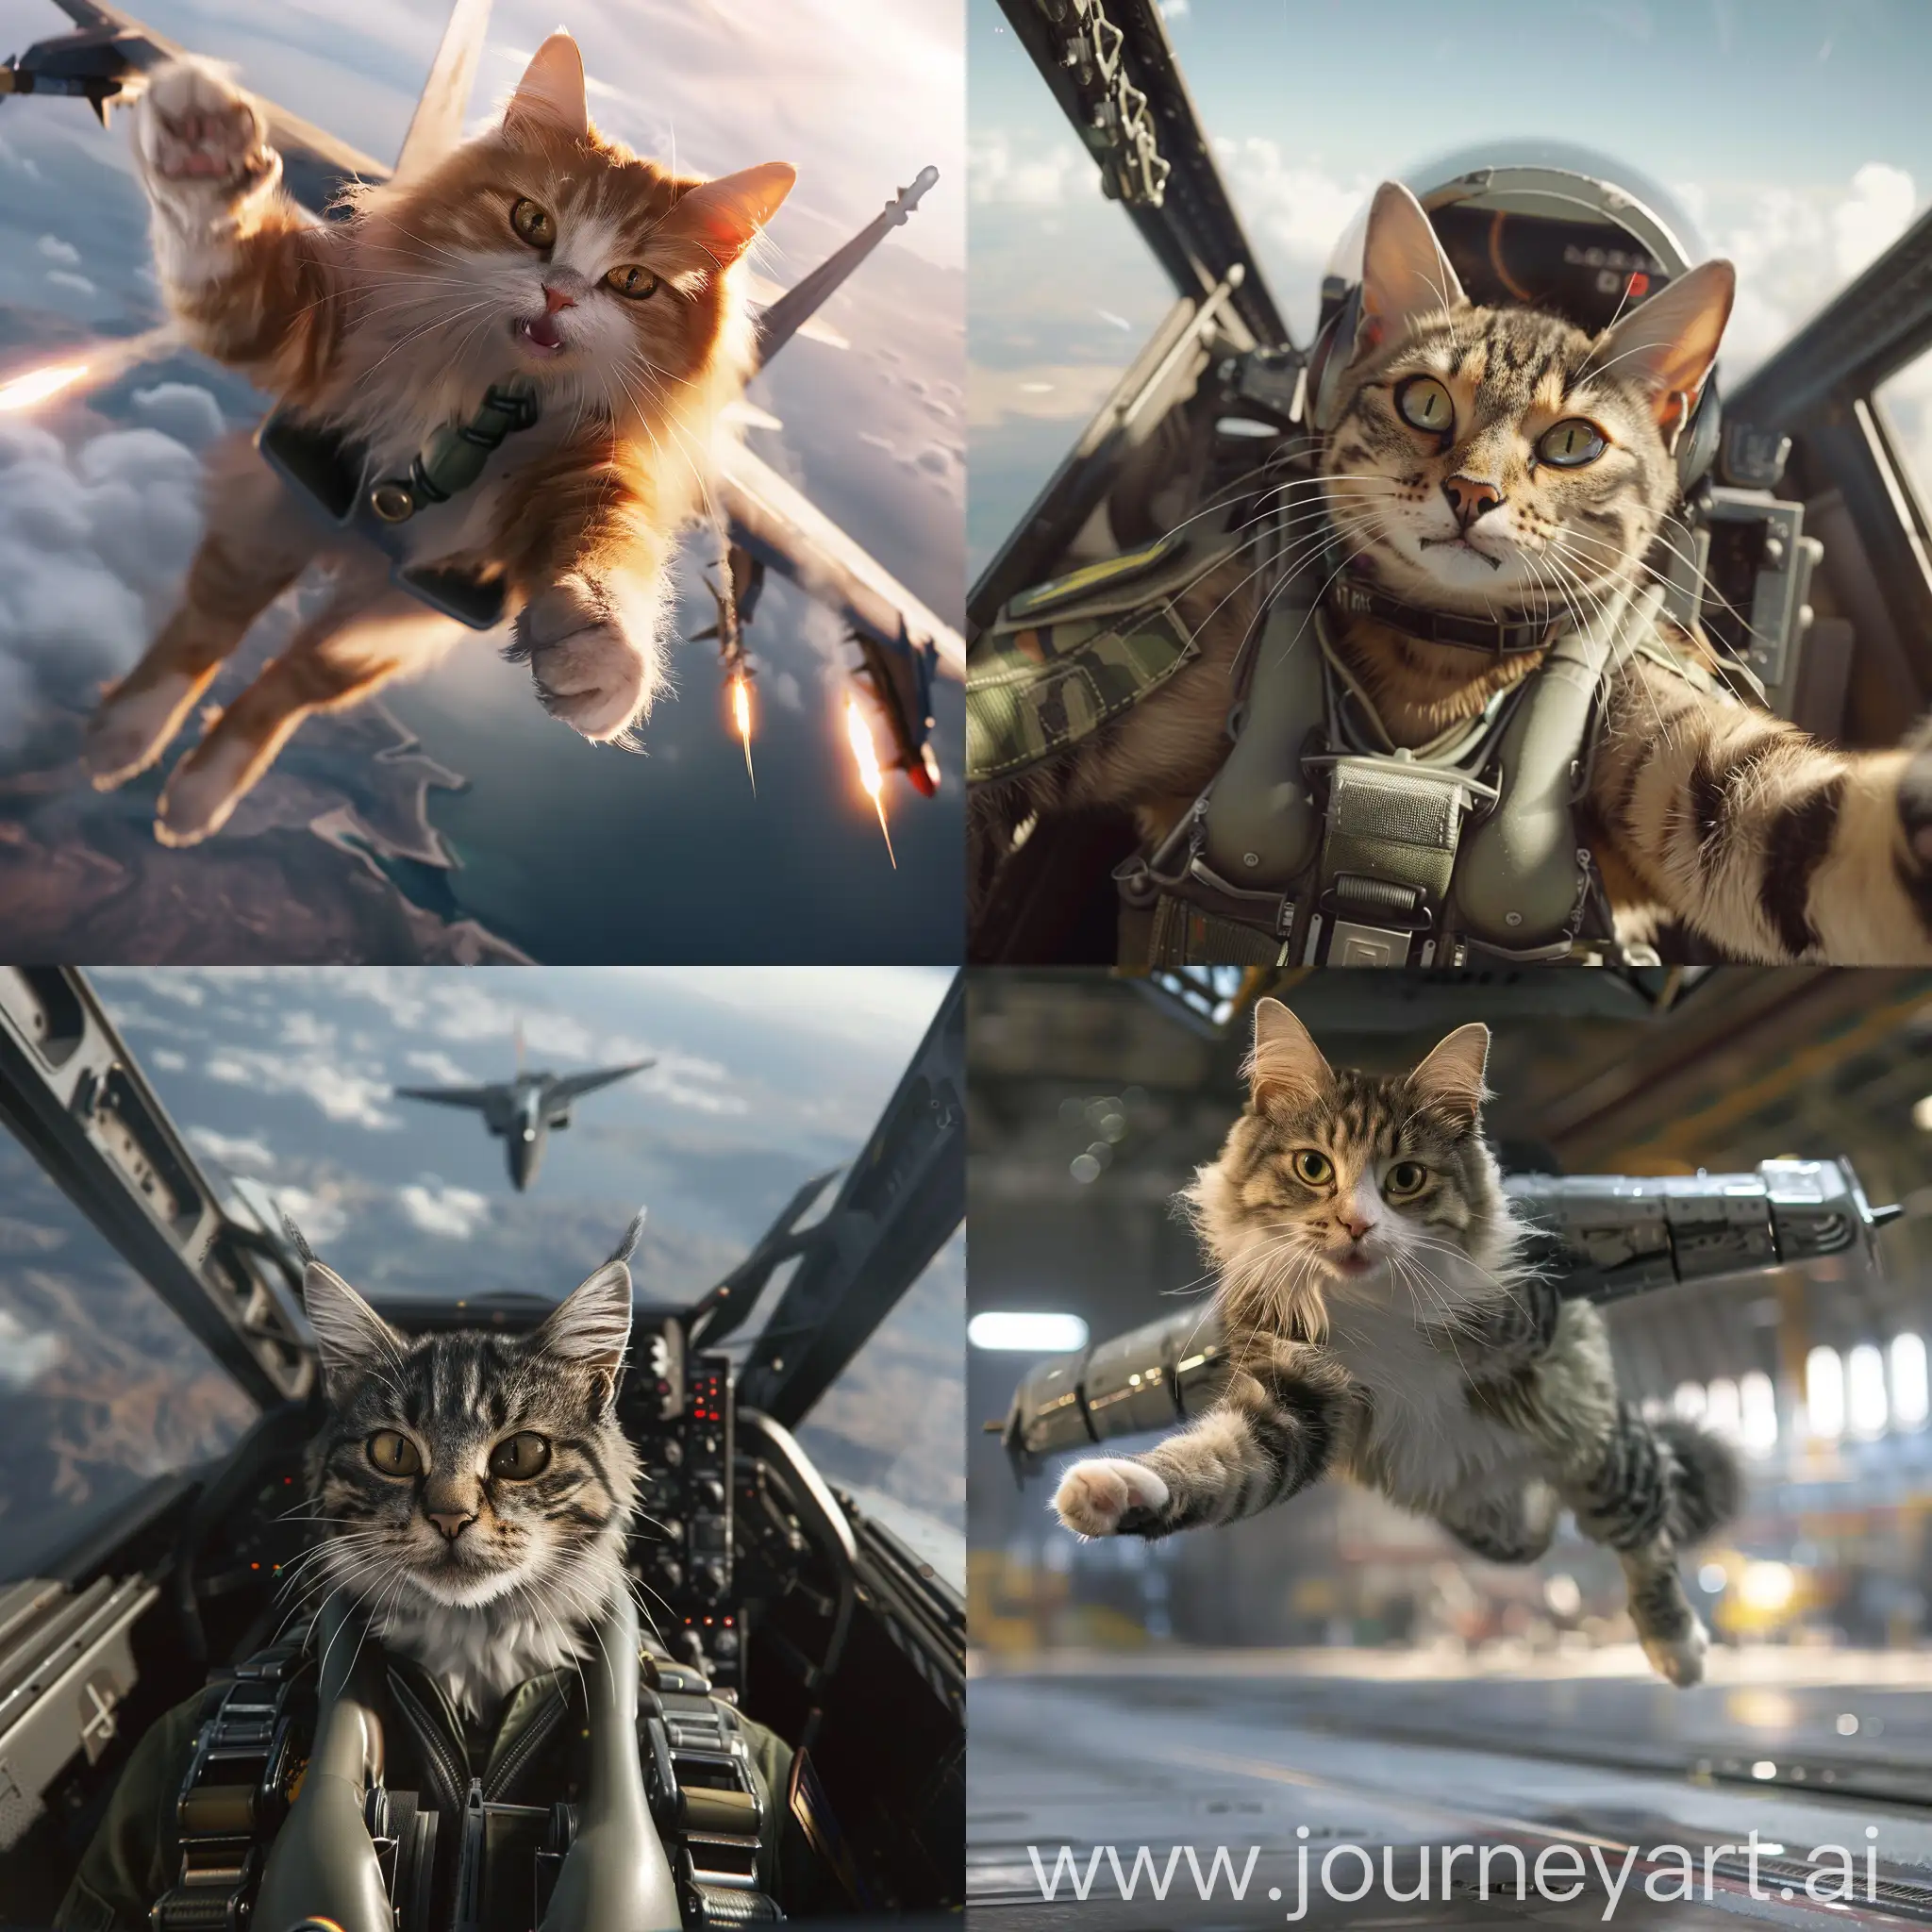 Cat-Arsenal-Bird-Launching-a-Feline-Missile